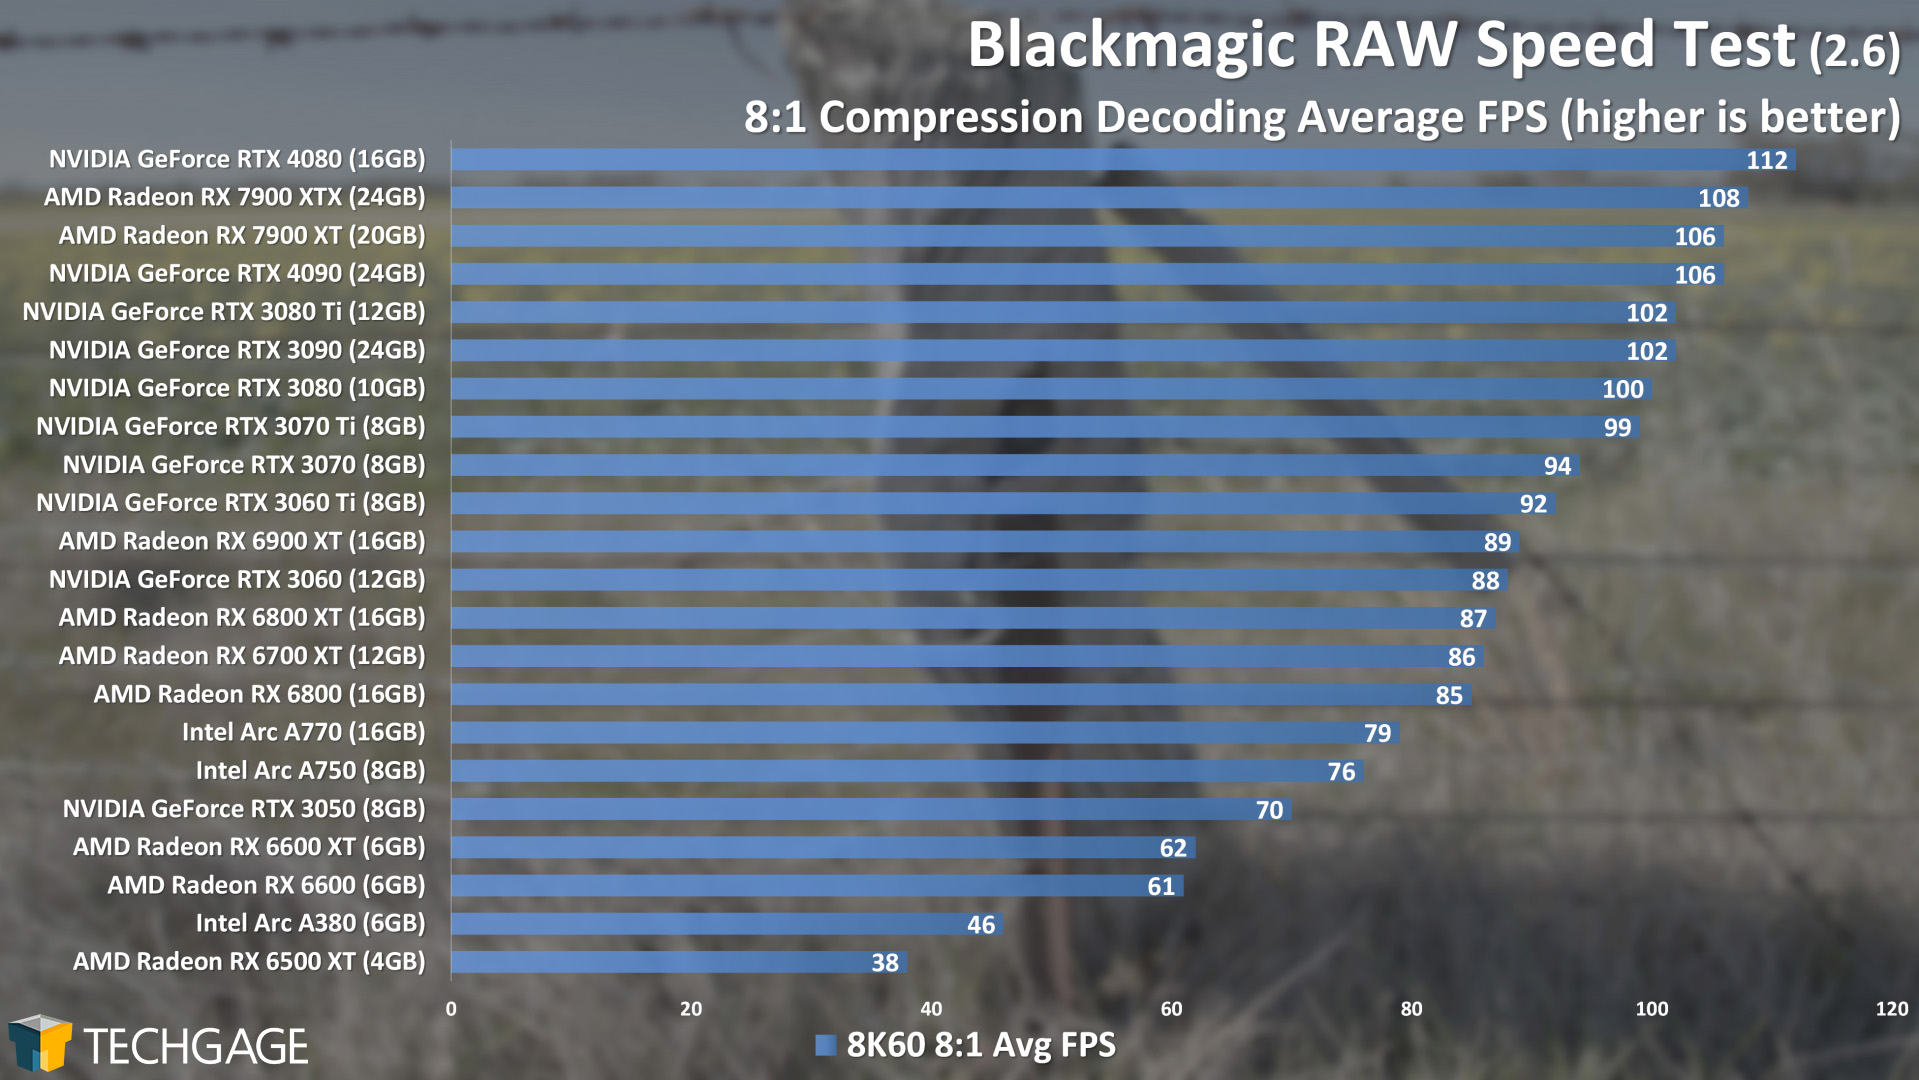 BRAW Speed Test 8-1 Compression Performance (AMD Radeon RX 7900 XT and XTX)